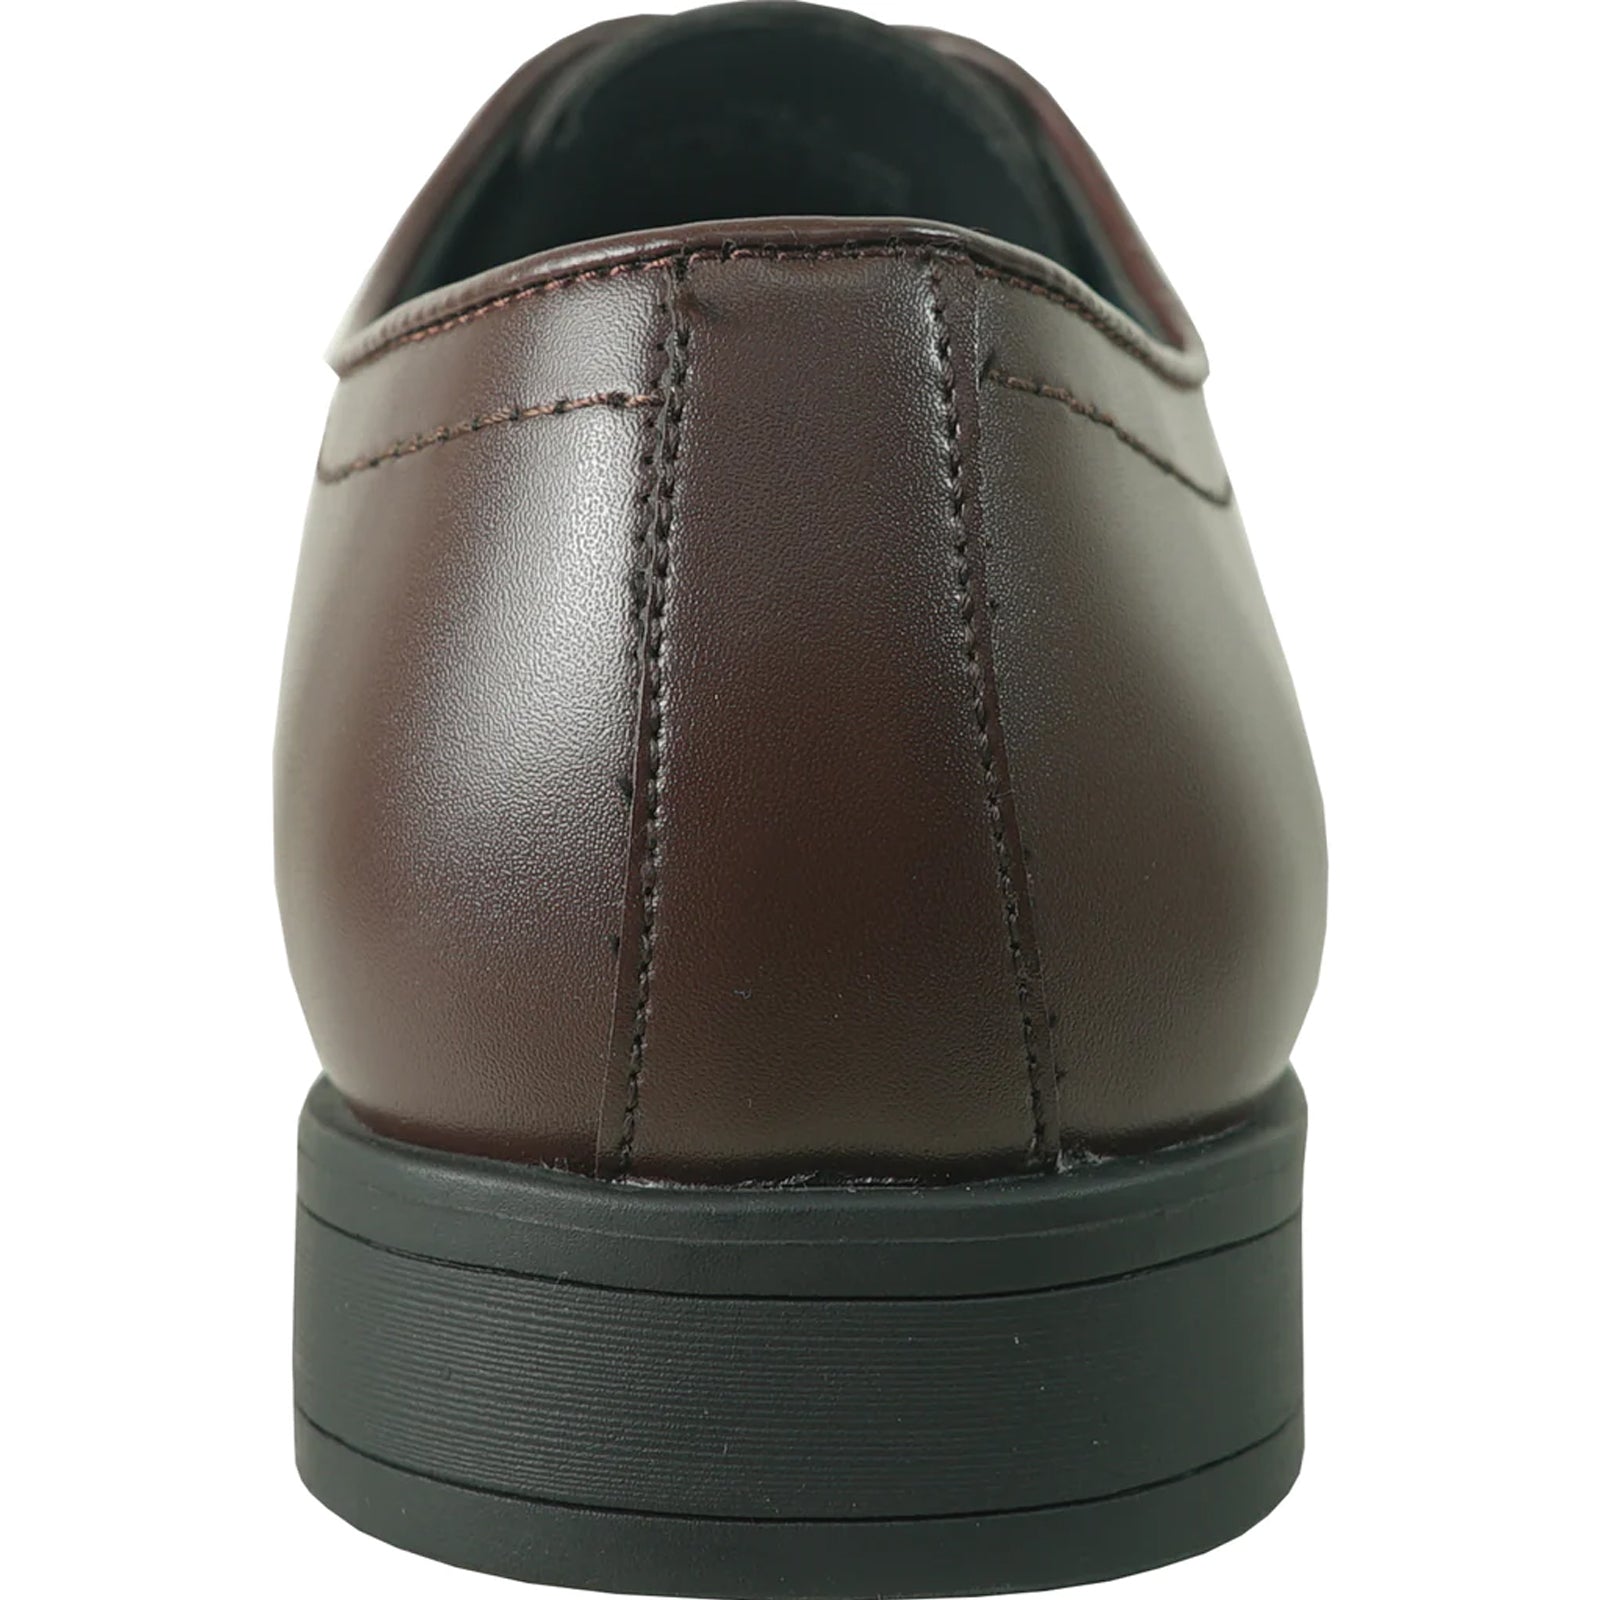 "Dark Brown Men's Oxford Dress Shoes - Plain Round Toe Style"